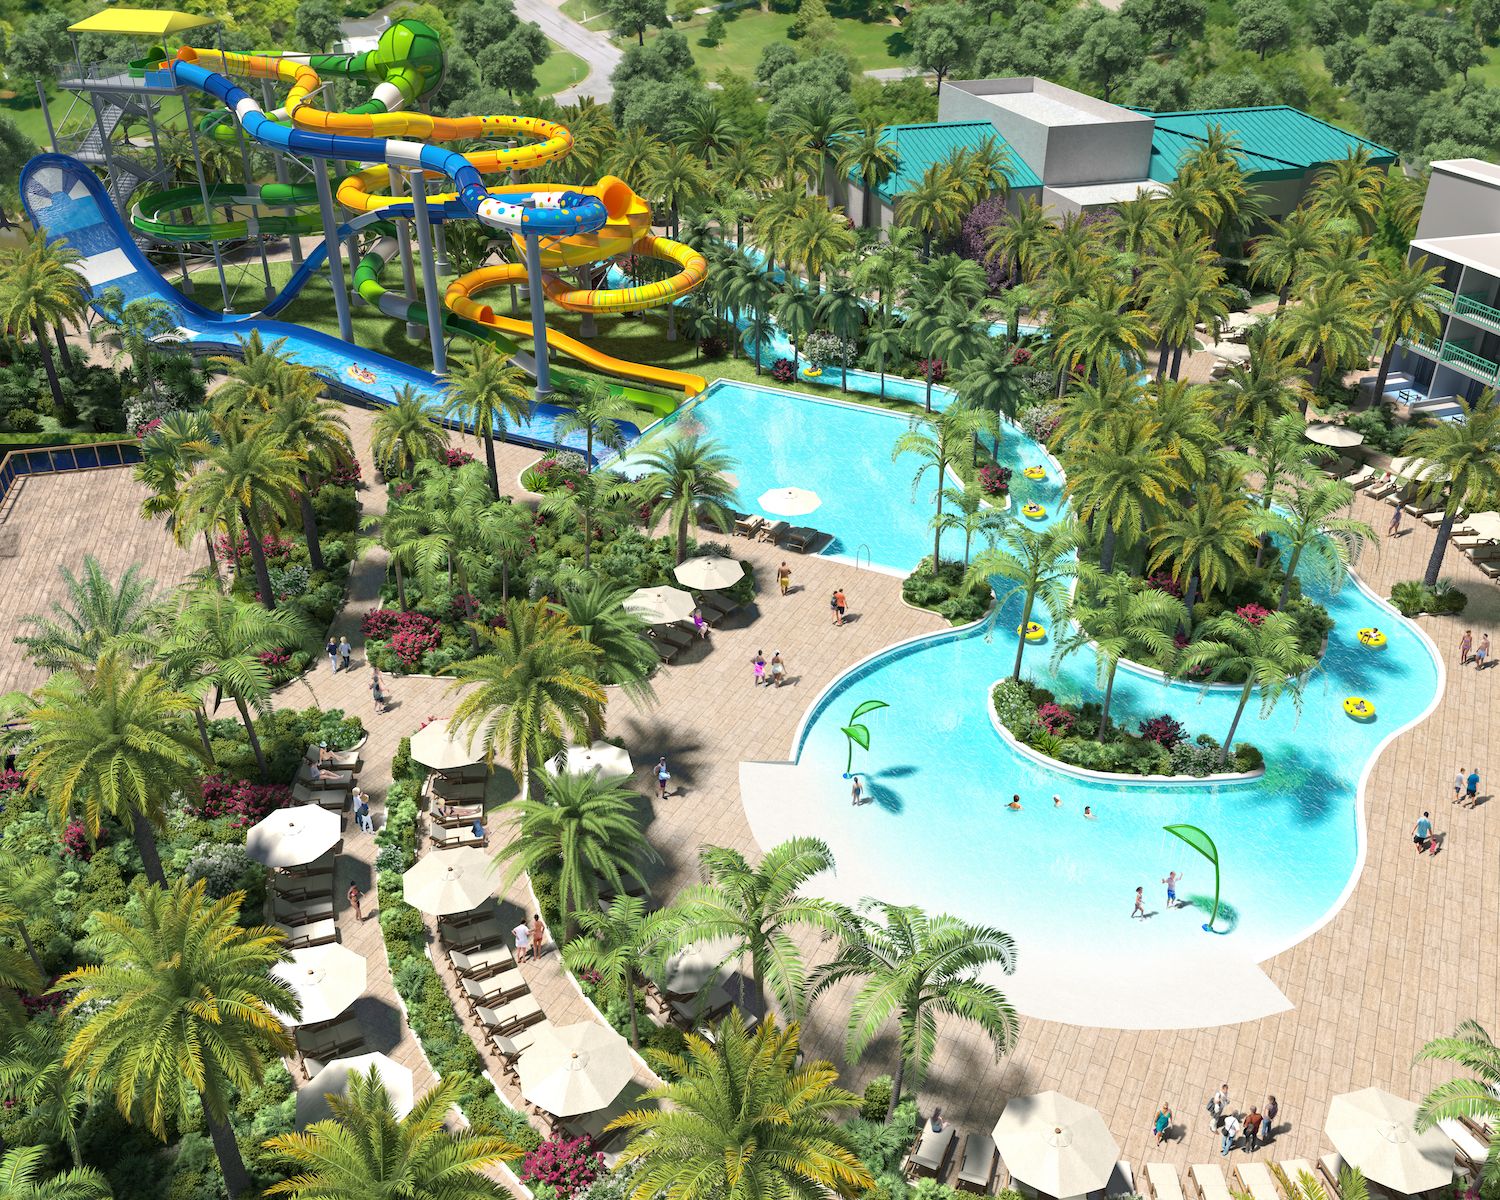 River Falls Water Park opens at Orlando World Center Marriott